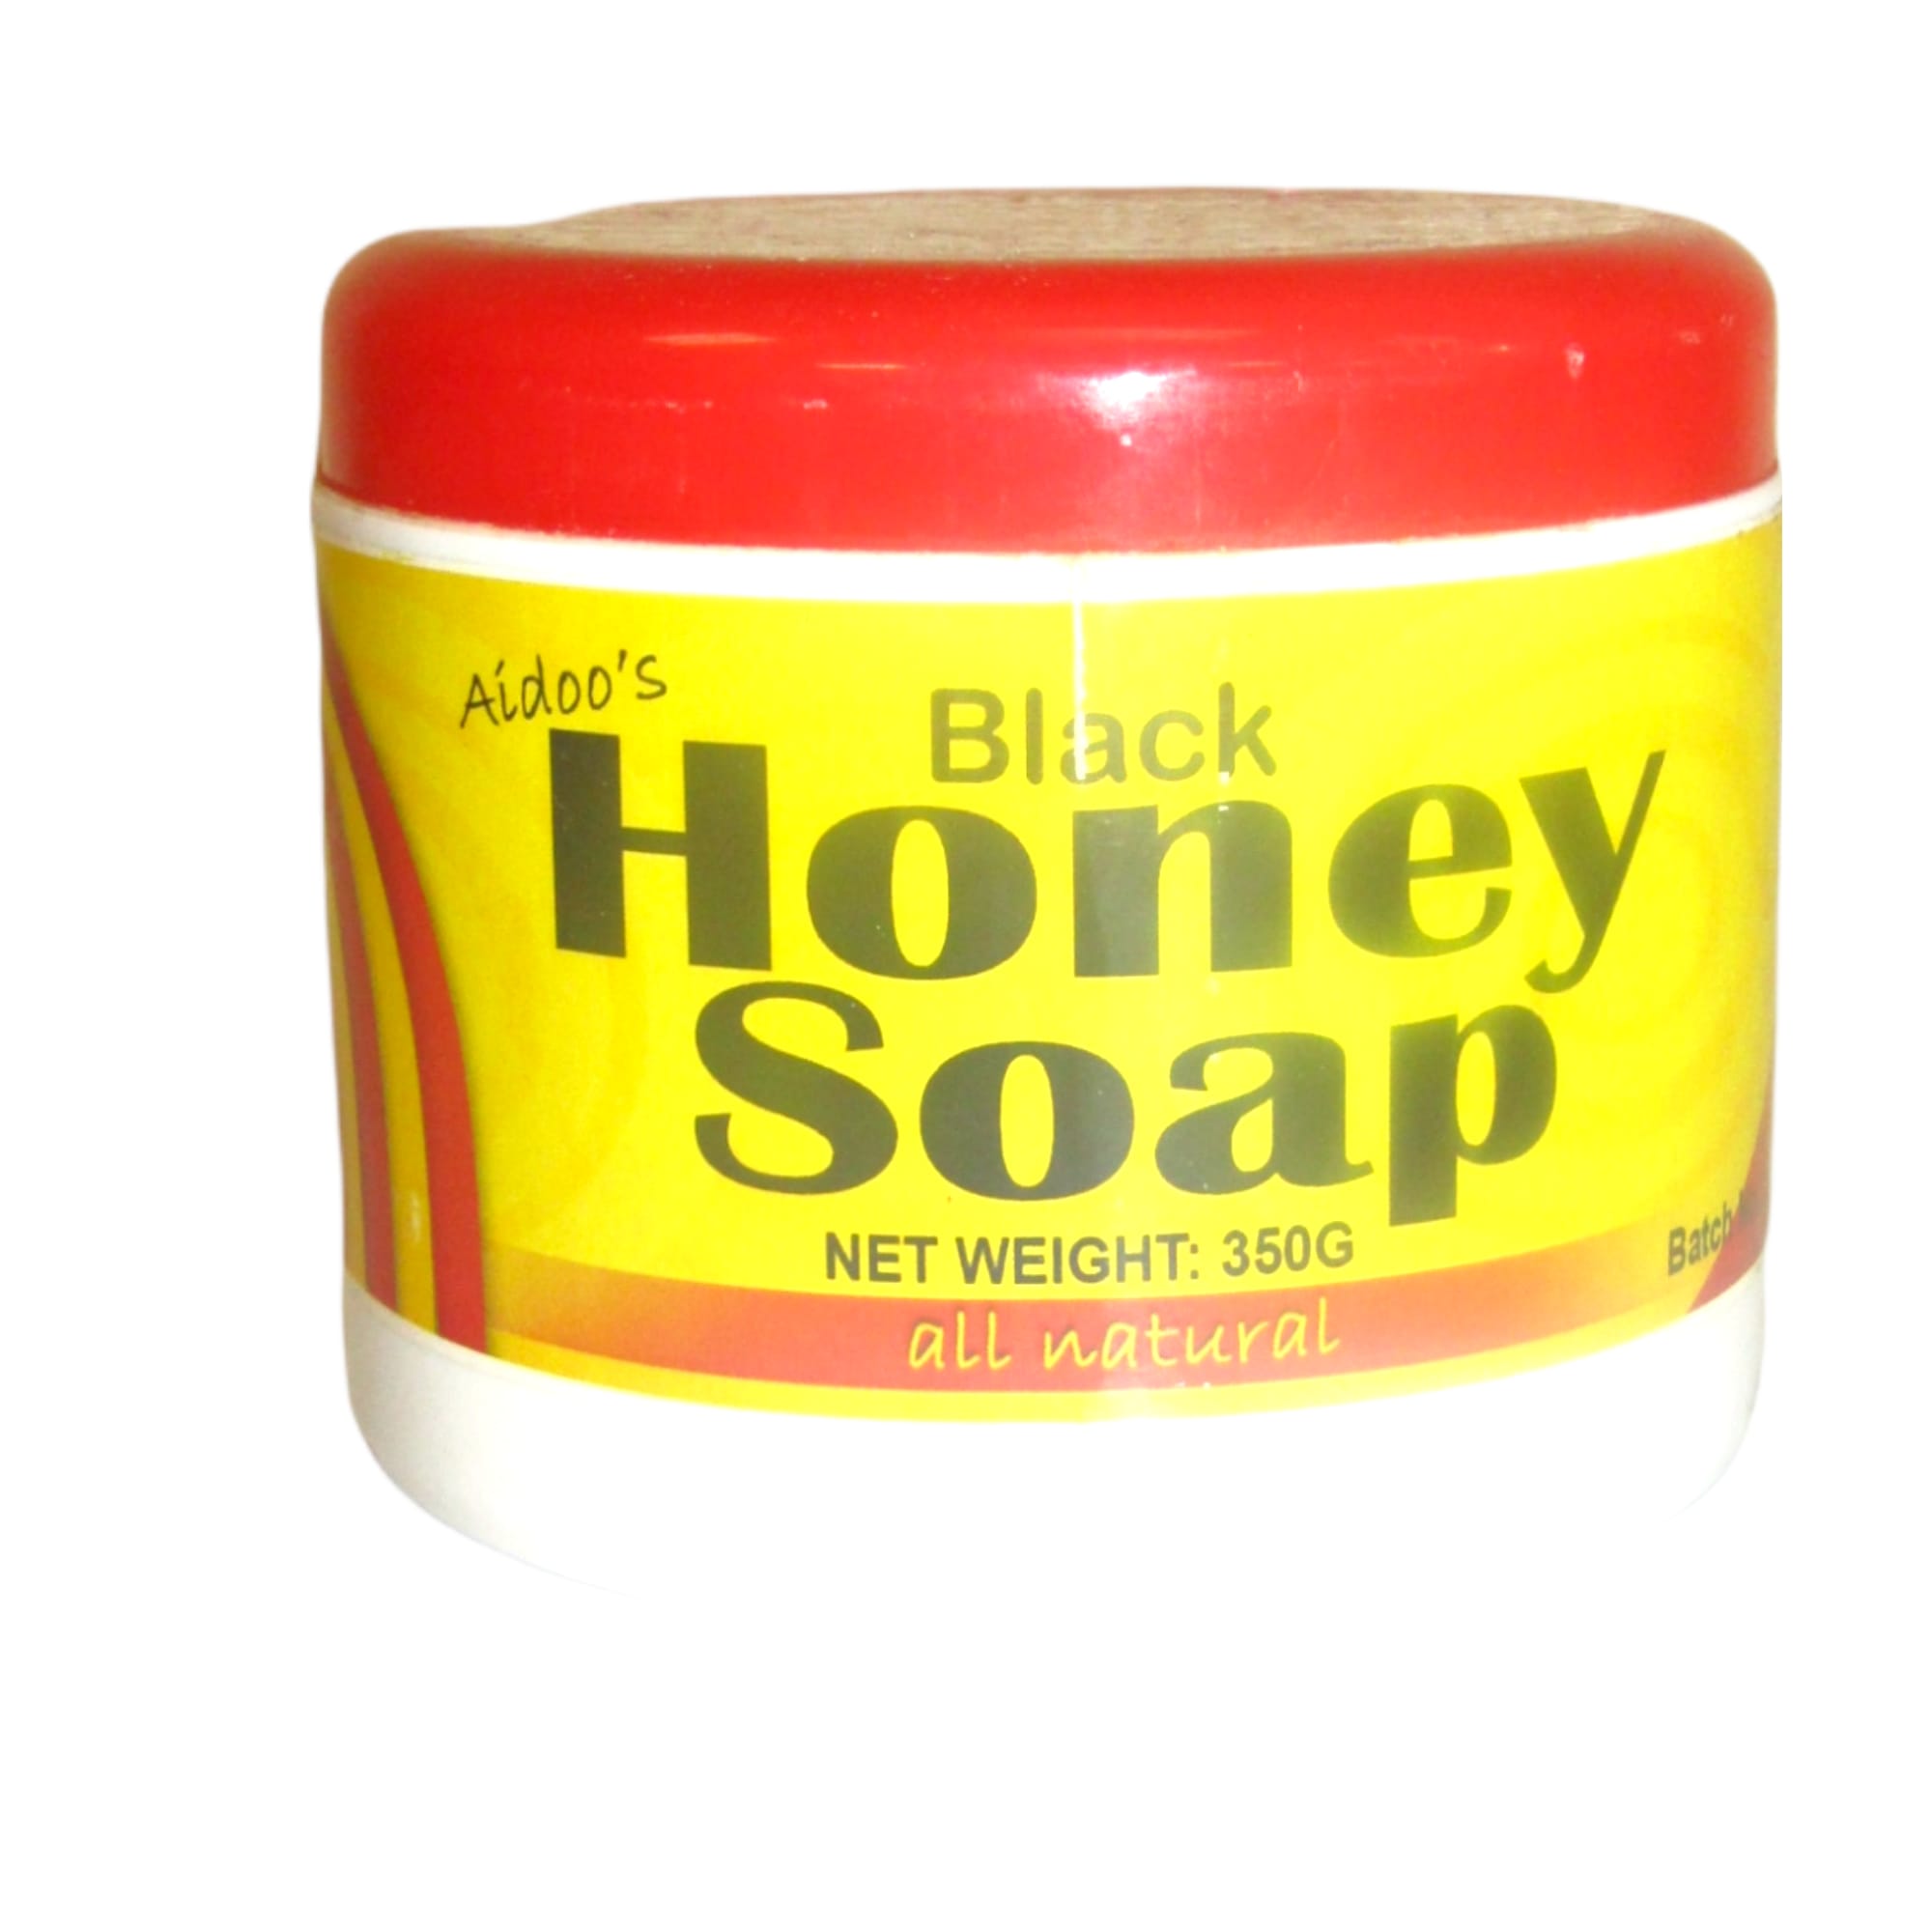 Black honey soap